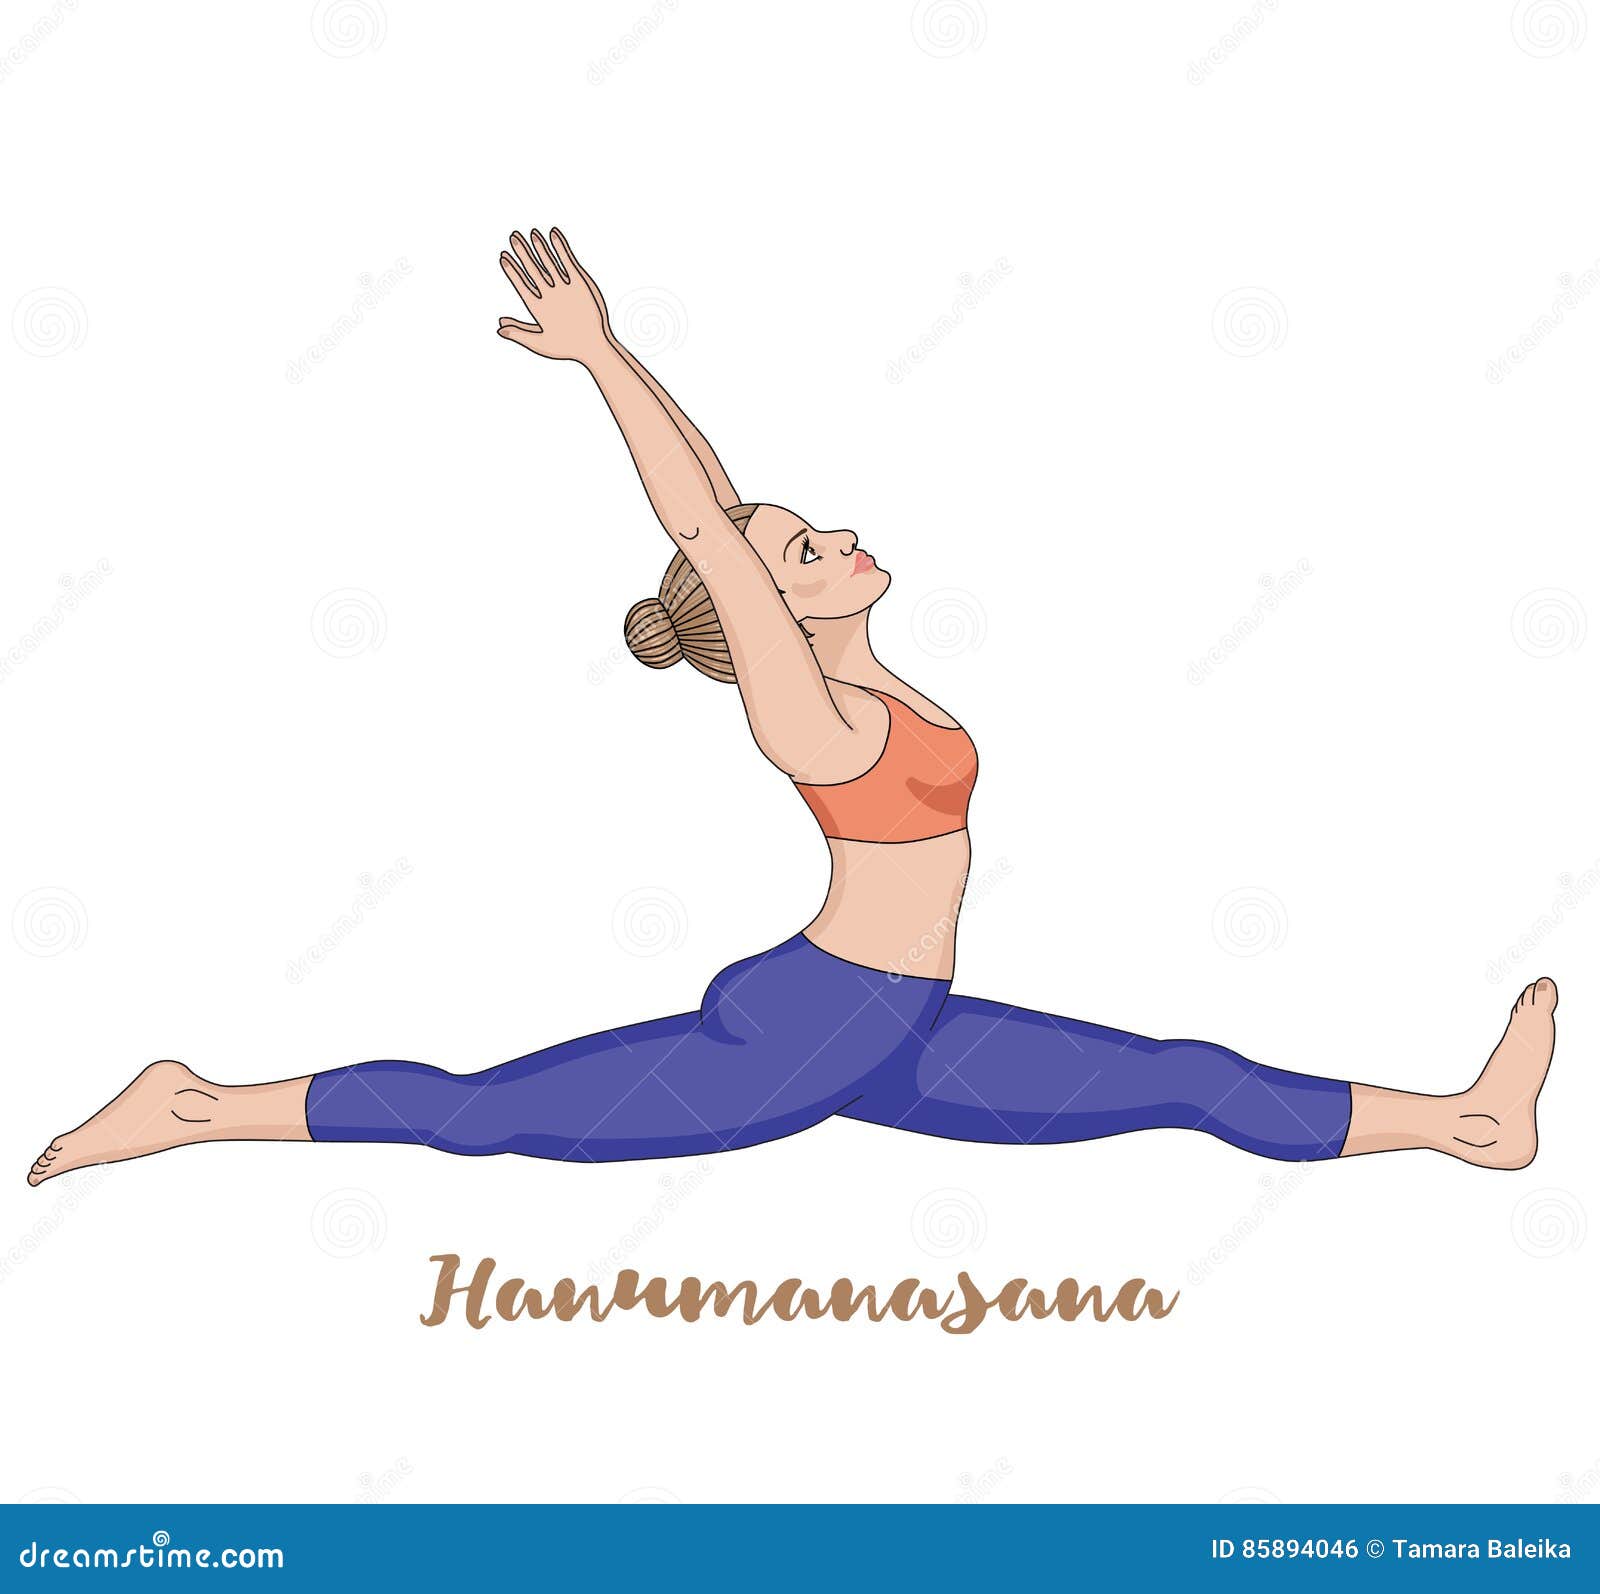 Hanumanasana | Splits or Monkey Pose | Steps | Benefits | Precautions